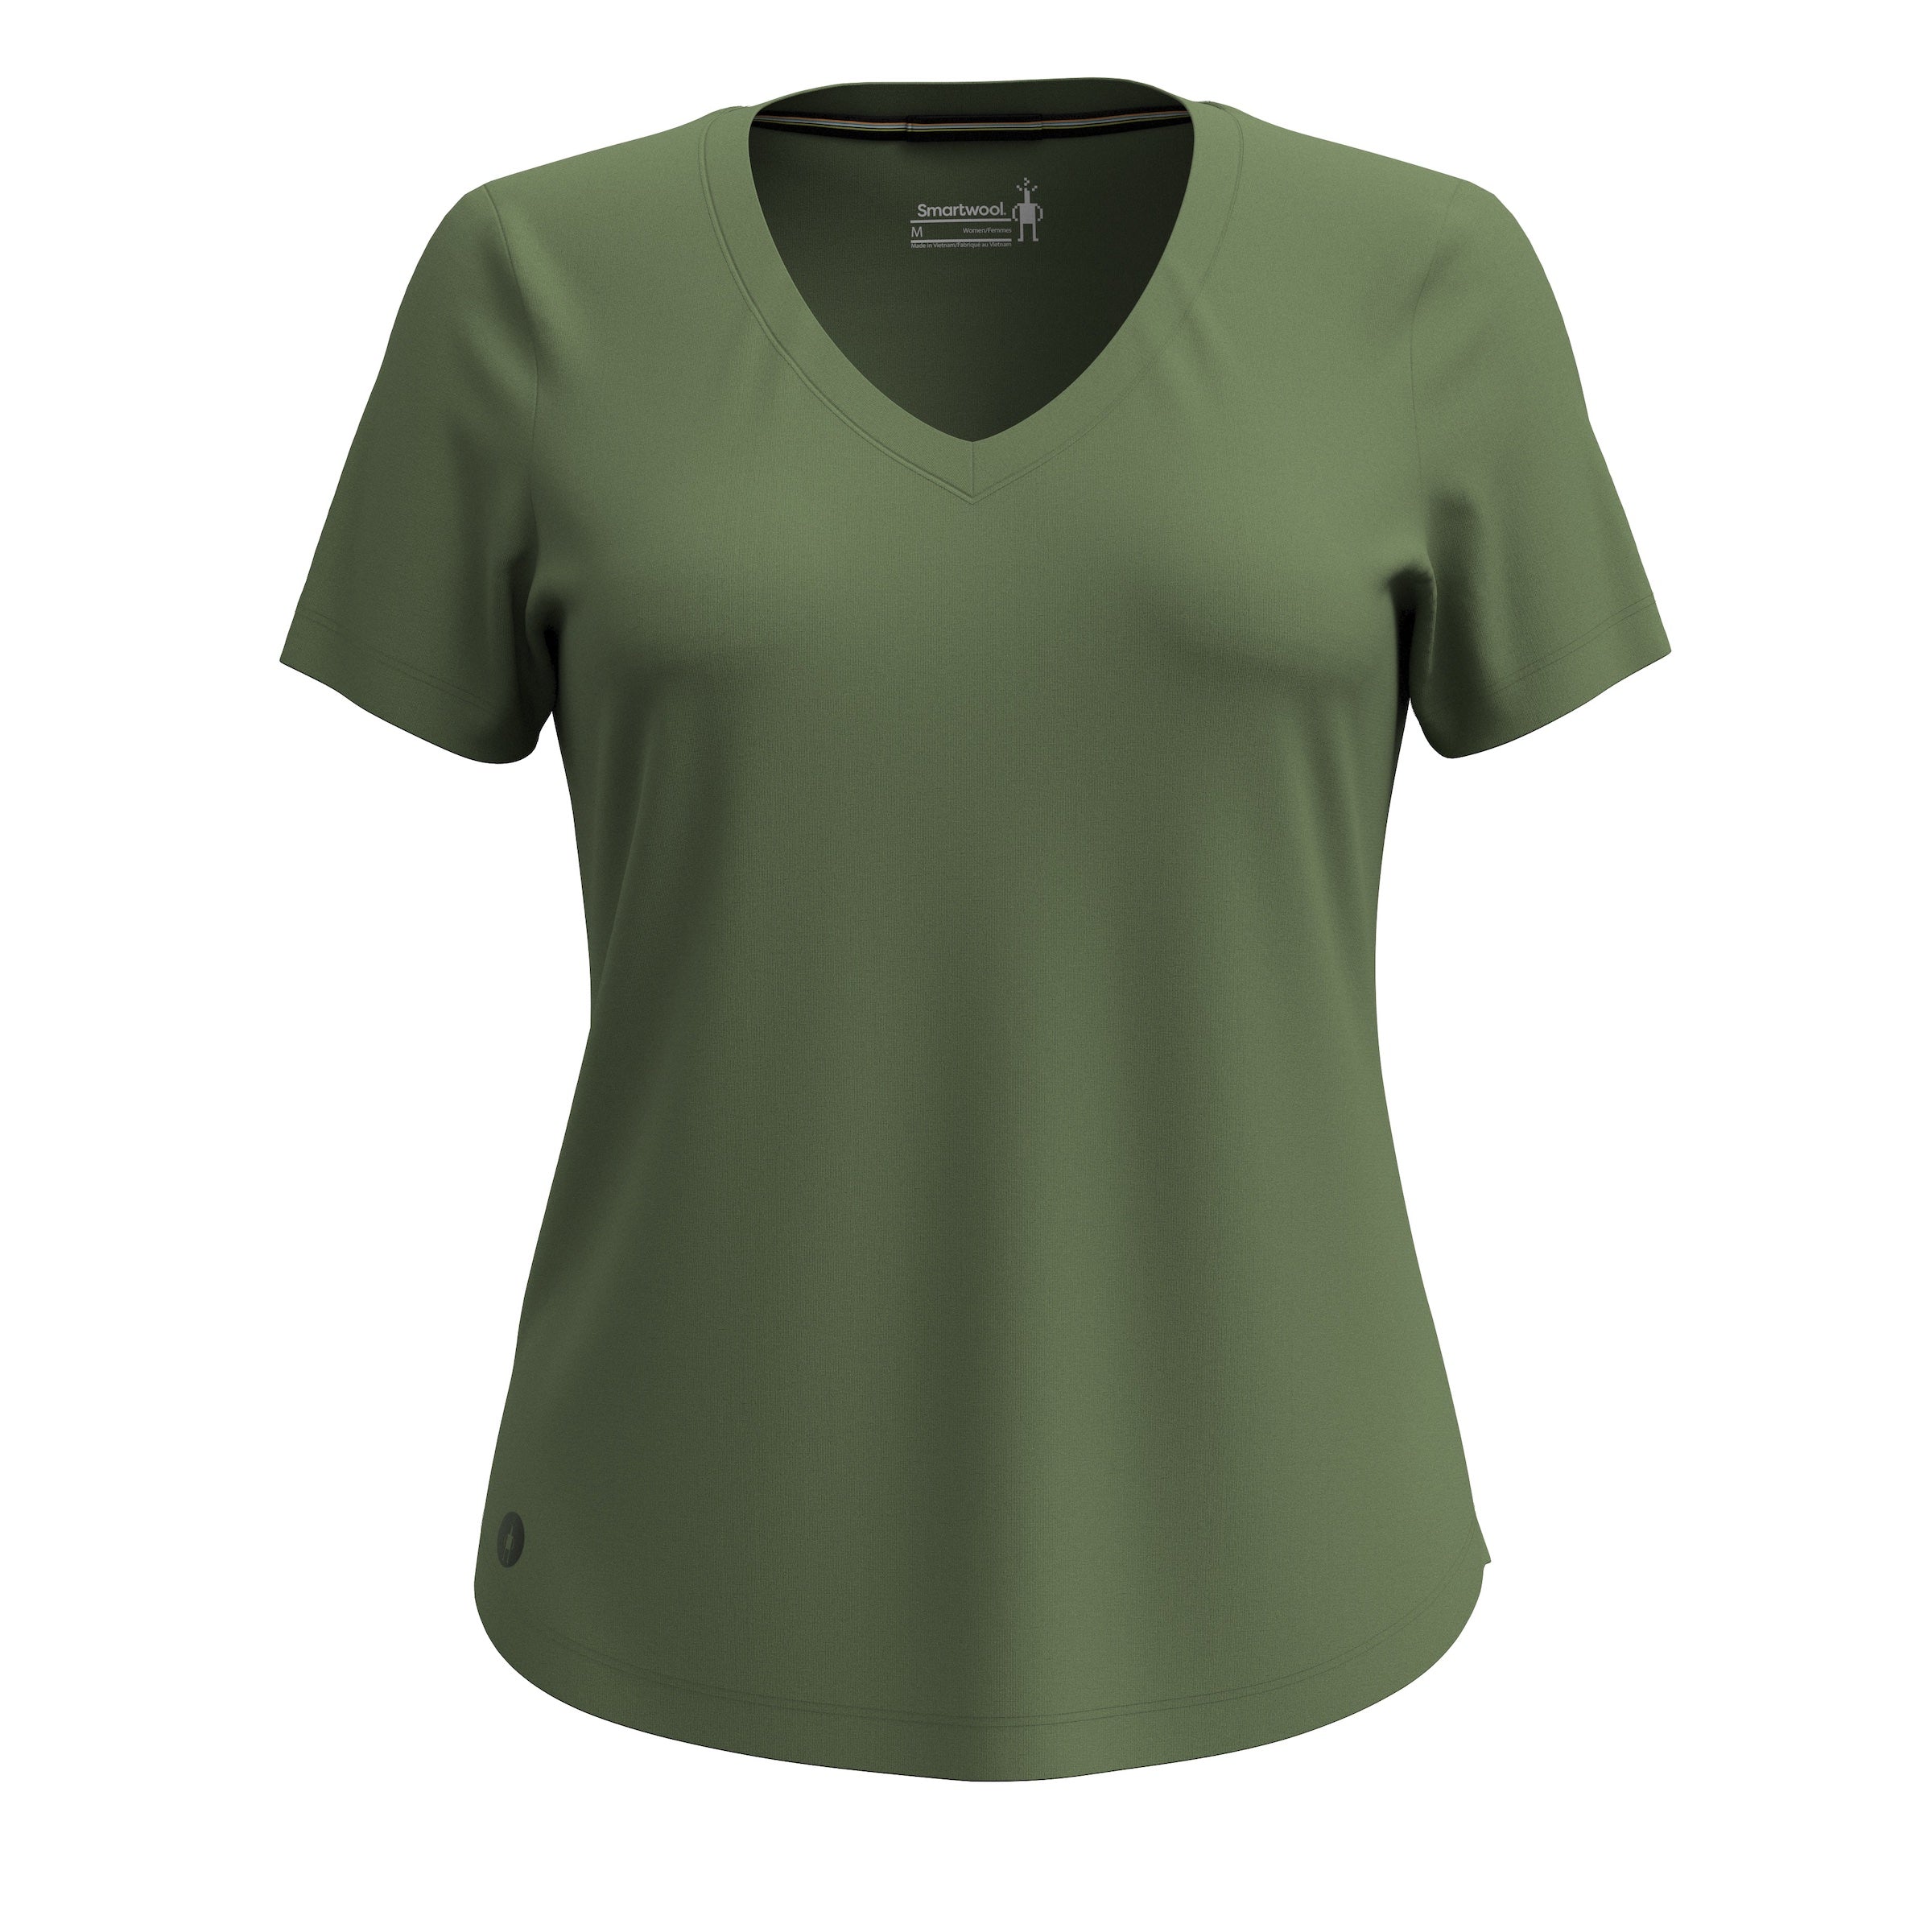 Smartwool Active Ultralite V-Neck Shirt - Womens